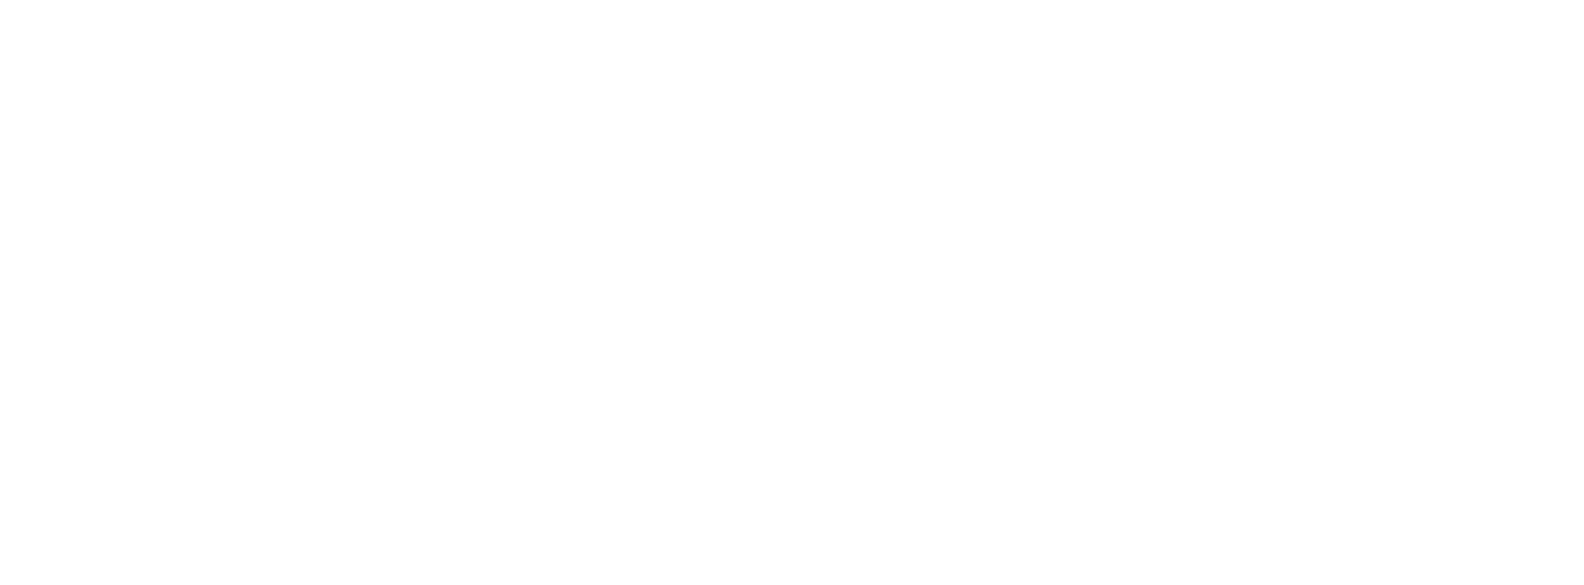 Infosys logo large for dark backgrounds (transparent PNG)